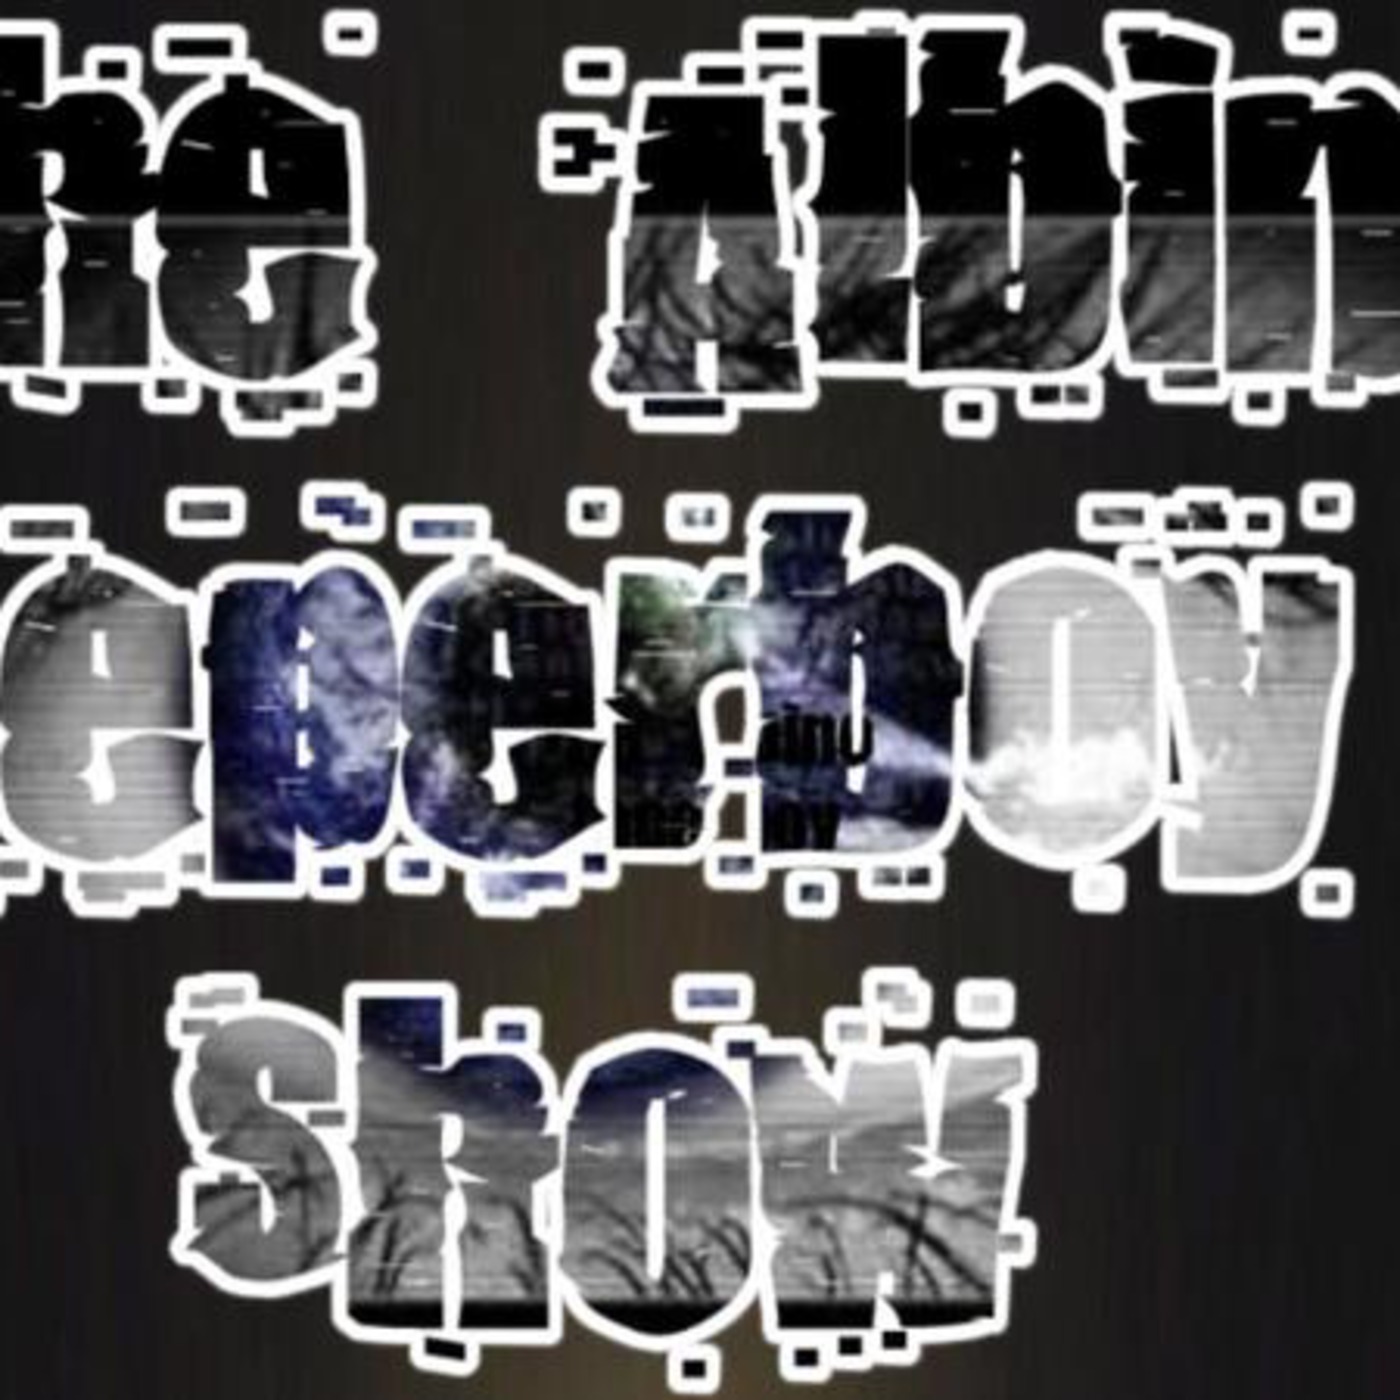 The Albino Leperboy Show